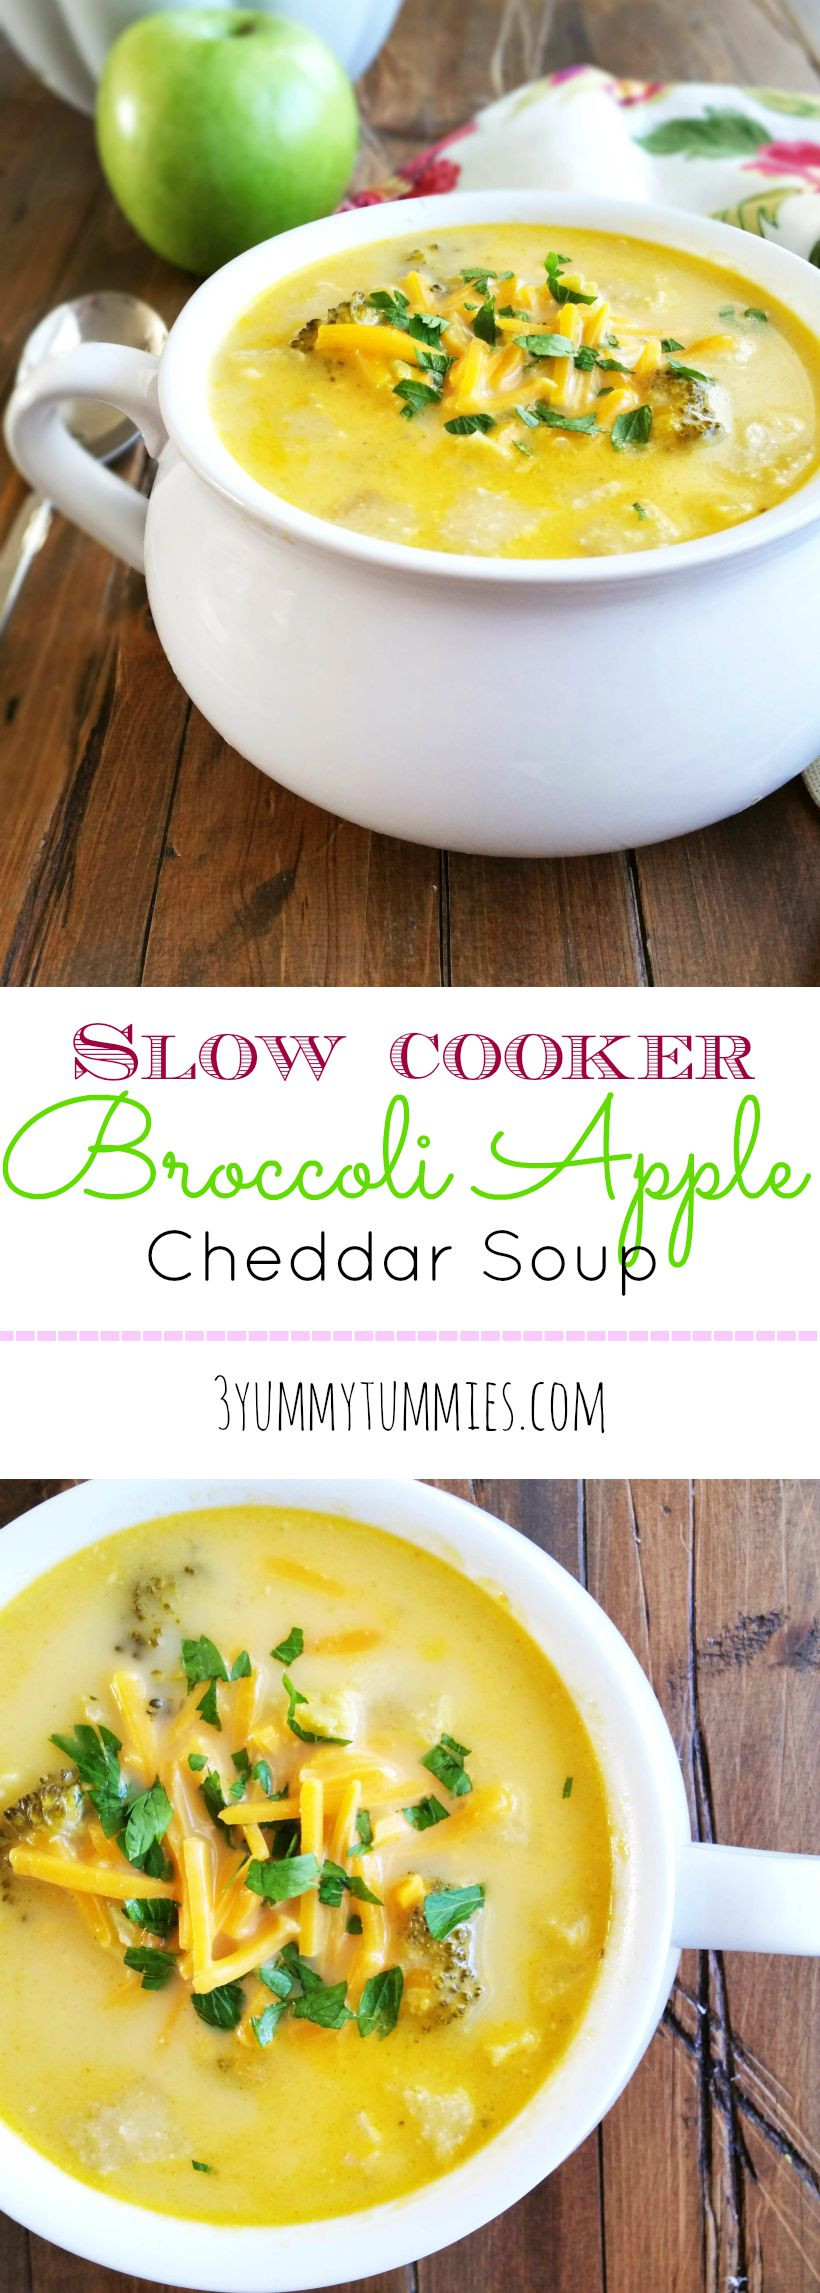 Broccoli Cheddar Soup Slow Cooker
 Slow Cooker Broccoli Apple Cheddar Soup